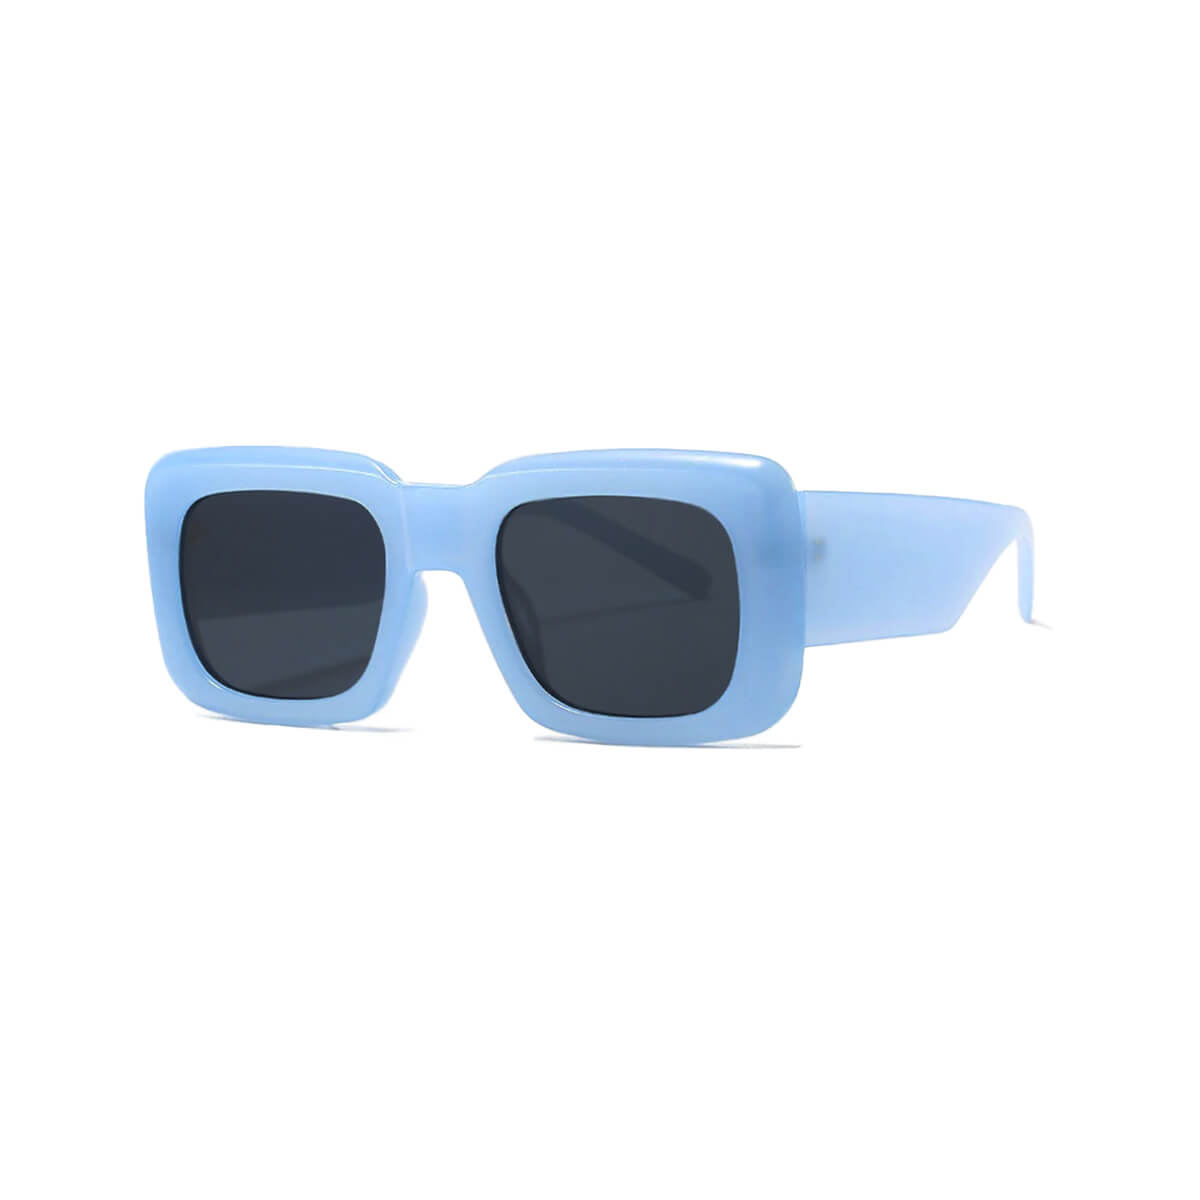 Oversized Blue Frame with Black Lens Sunglasses Front